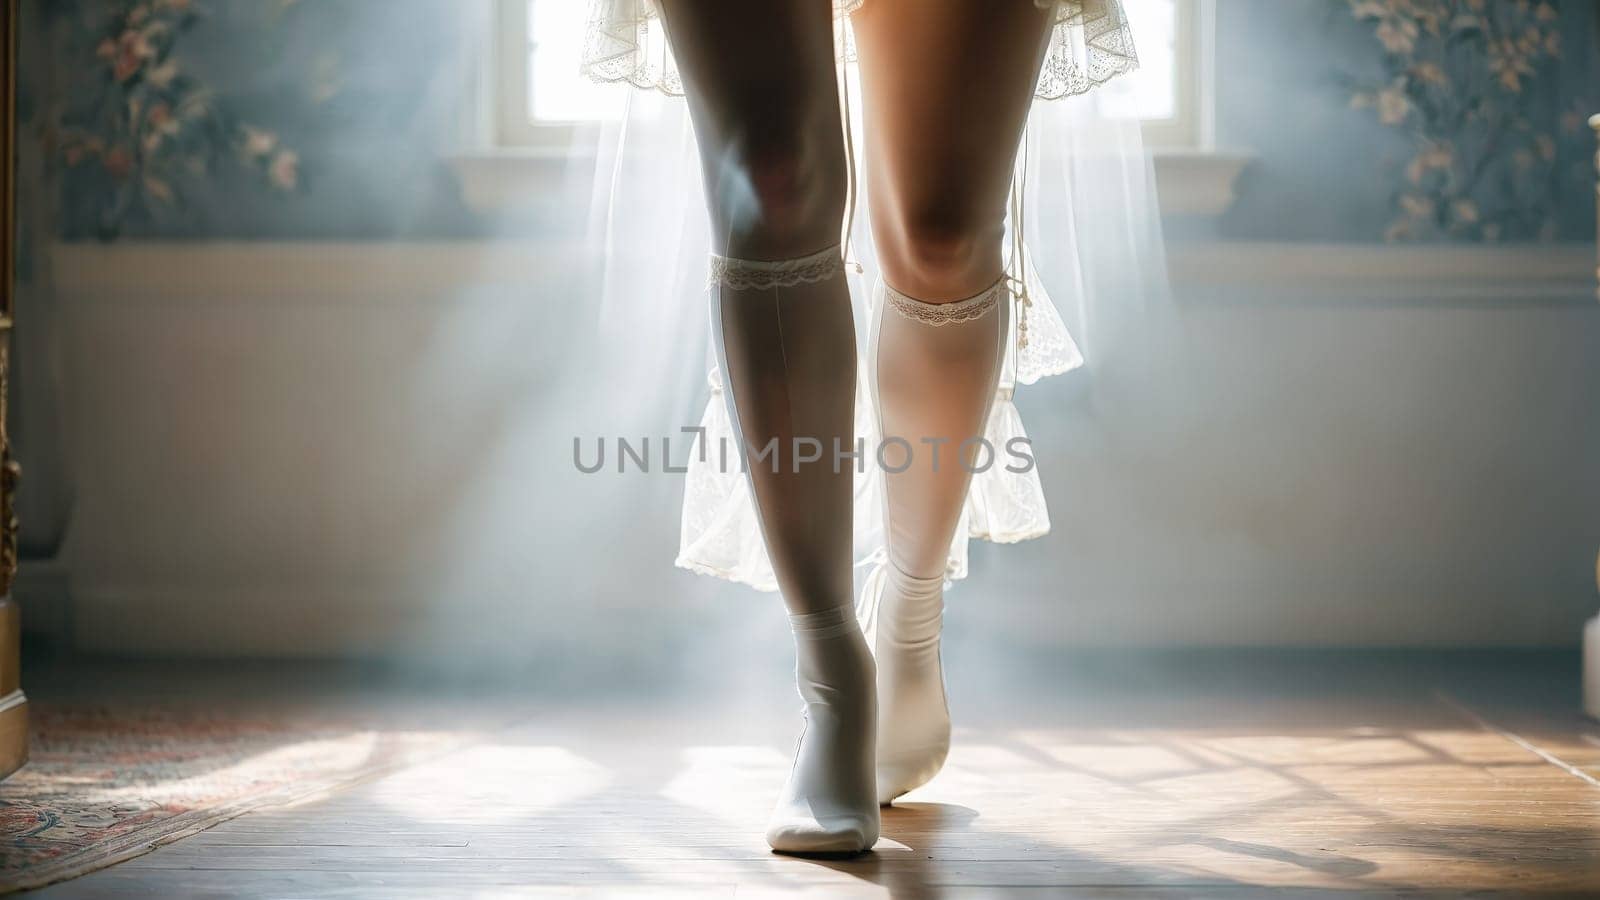 Lingerie model s lower body and long legs in sheer white stockings walking gracefully diverse.